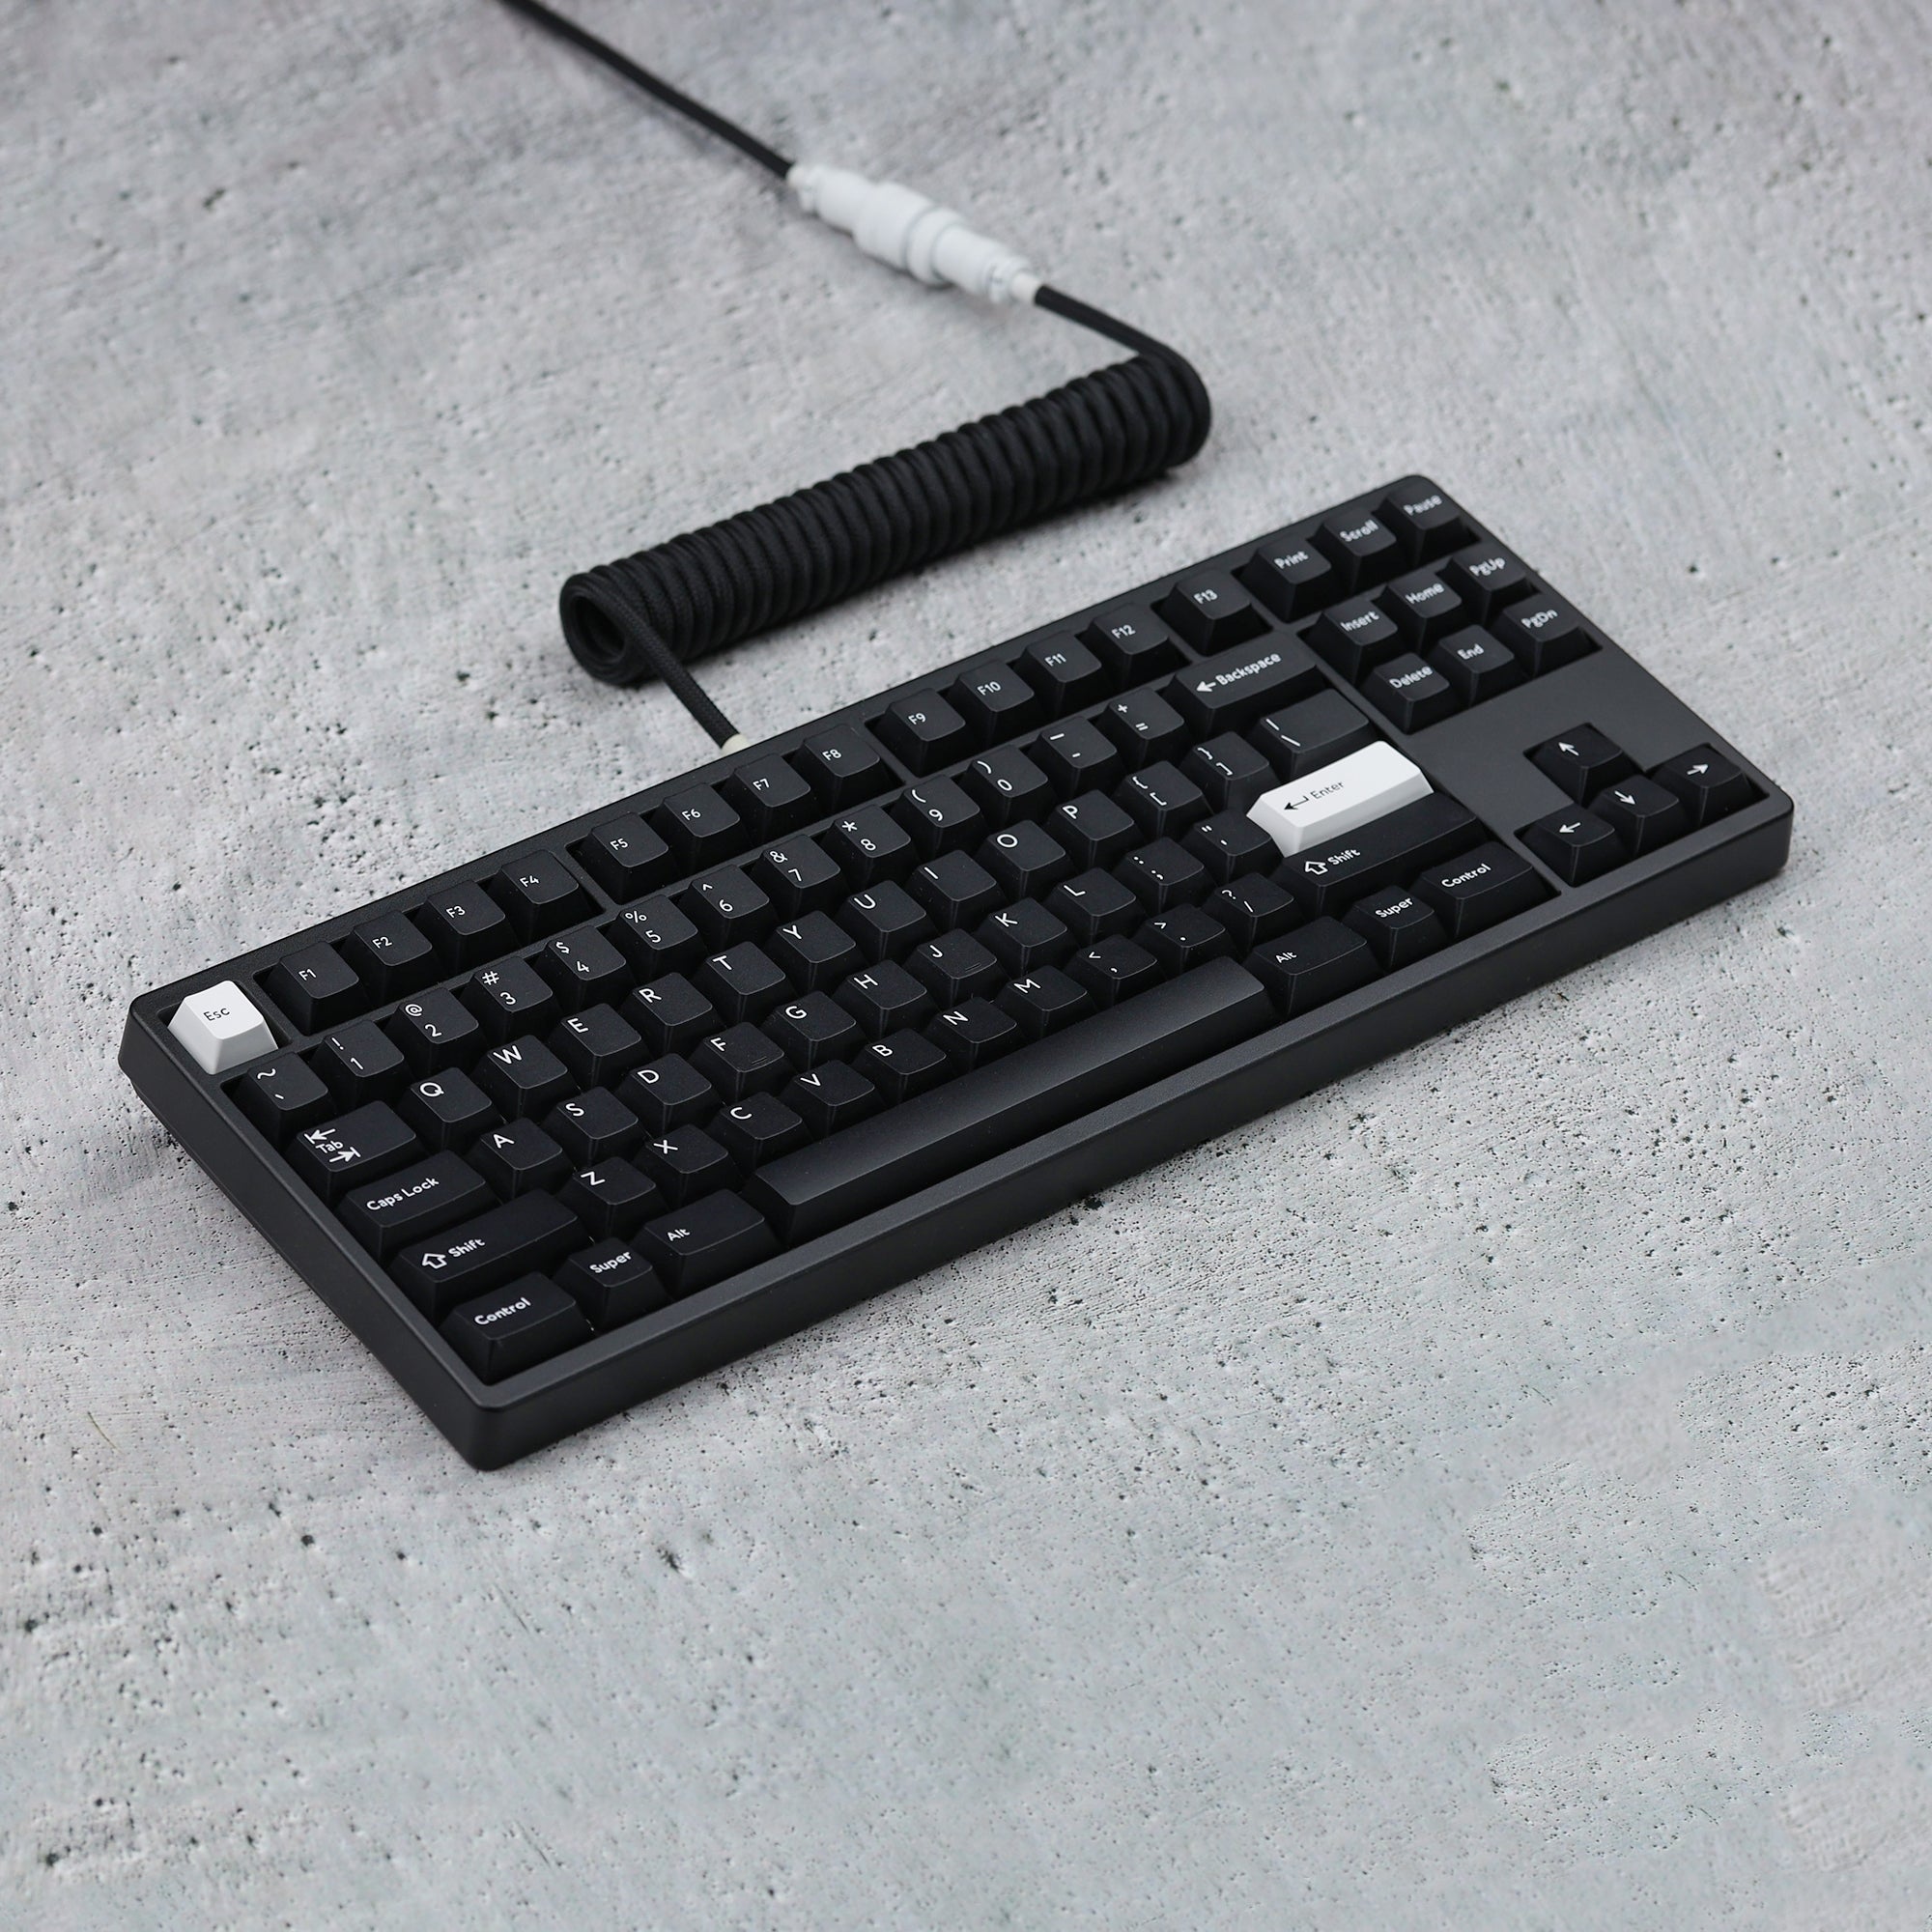 KBDfans Custom Keyboard Ready To Use Tiger Lite Hot-swap Keyboard With PBTfans WOB Keycaps